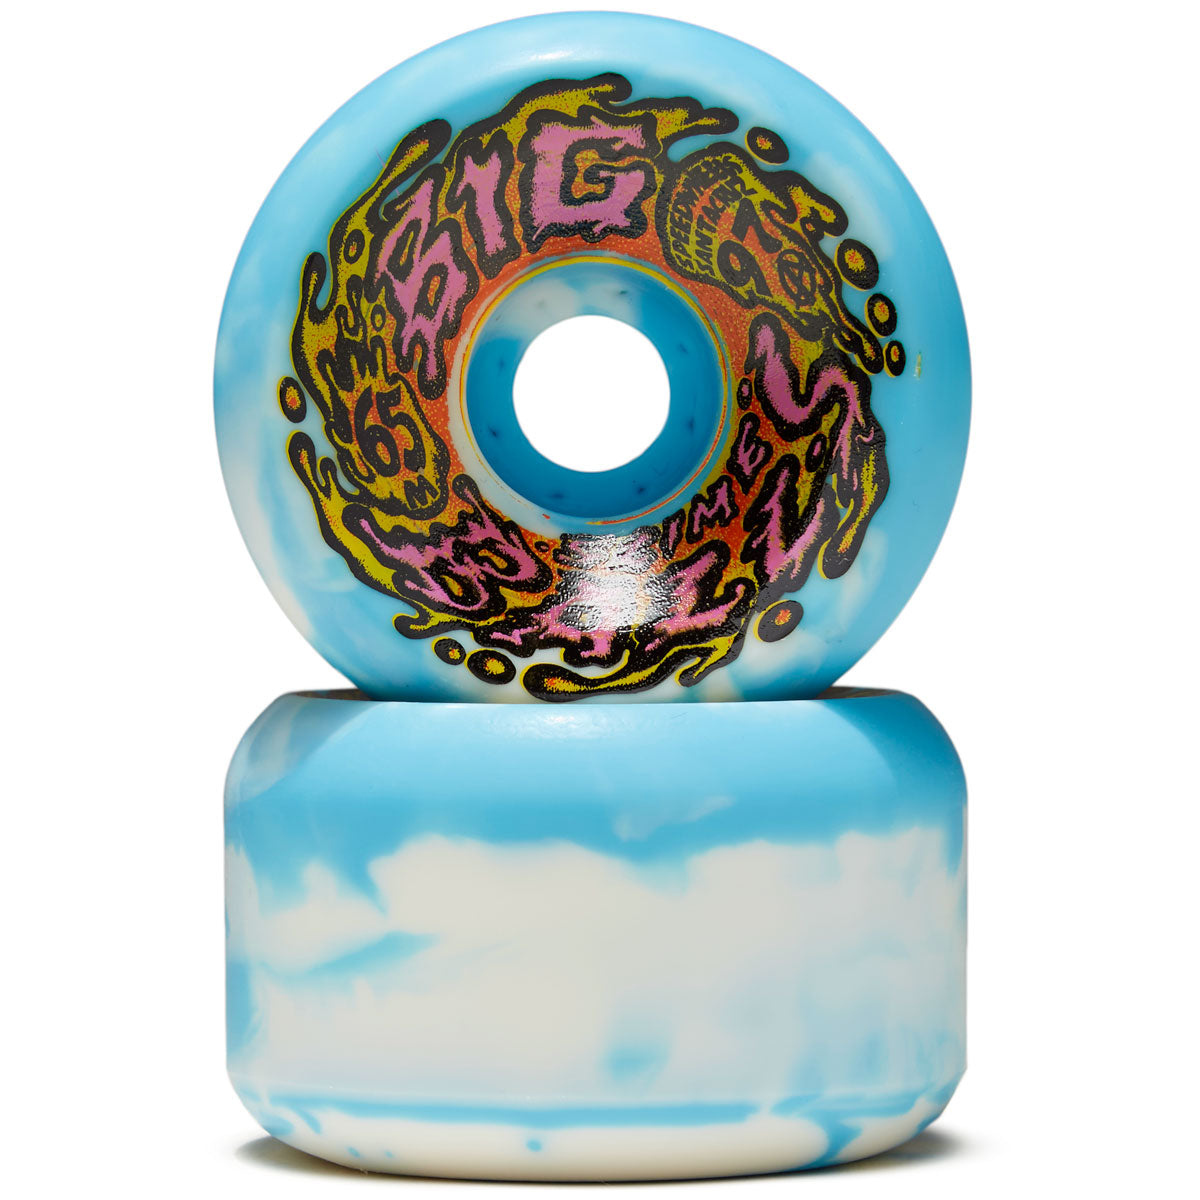 Slime Balls Big Balls 97a Skateboard Wheels - Blue/White Swirl - 65mm image 3